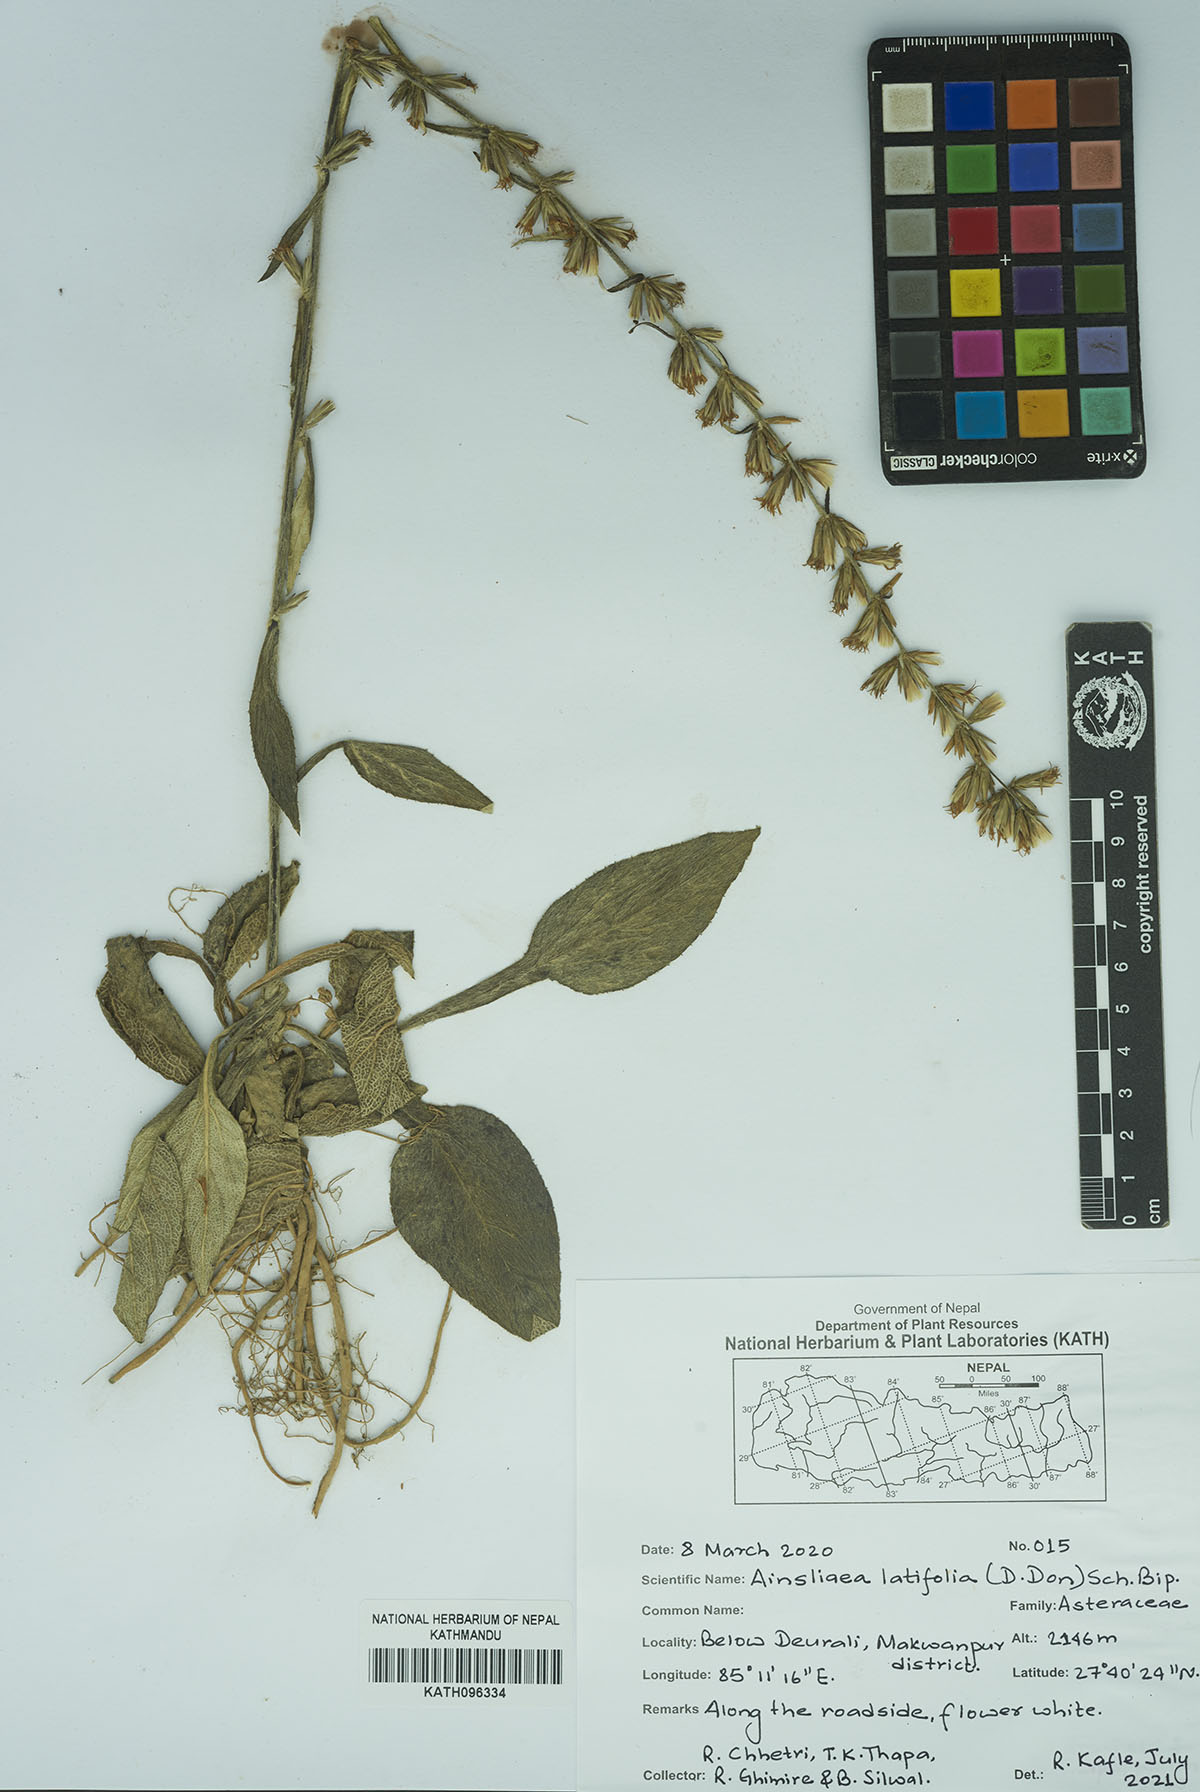 Ainselia latifolia (D.Don) Sch. Bip.